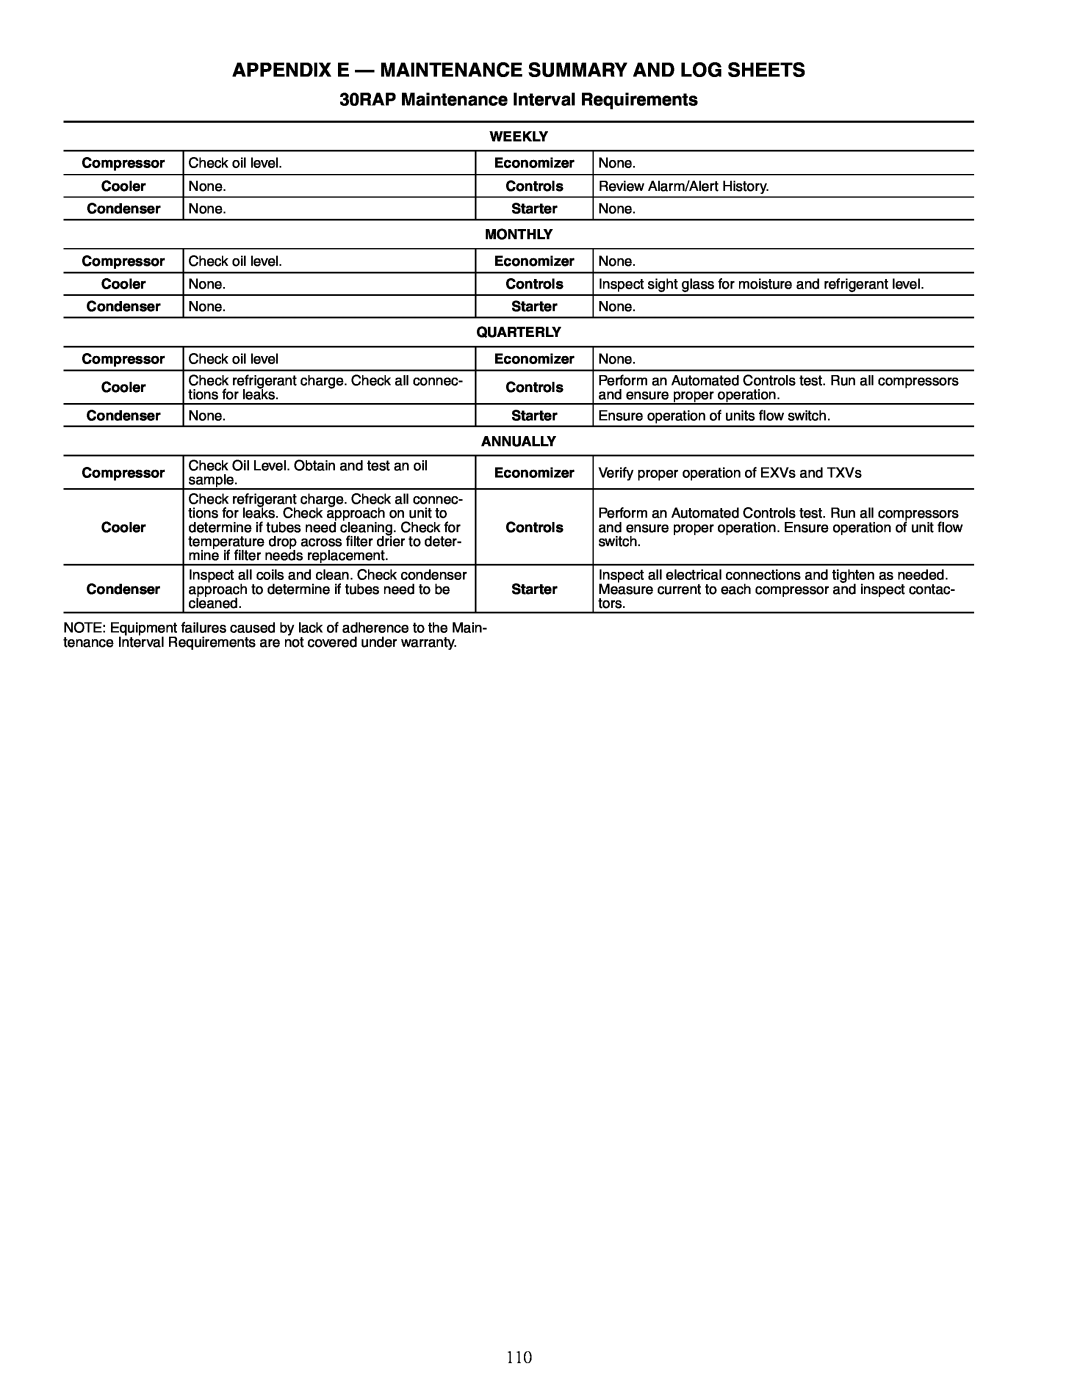 Carrier 30RAP010-060 Appendix E — Maintenance Summary And Log Sheets, 30RAP Maintenance Interval Requirements 